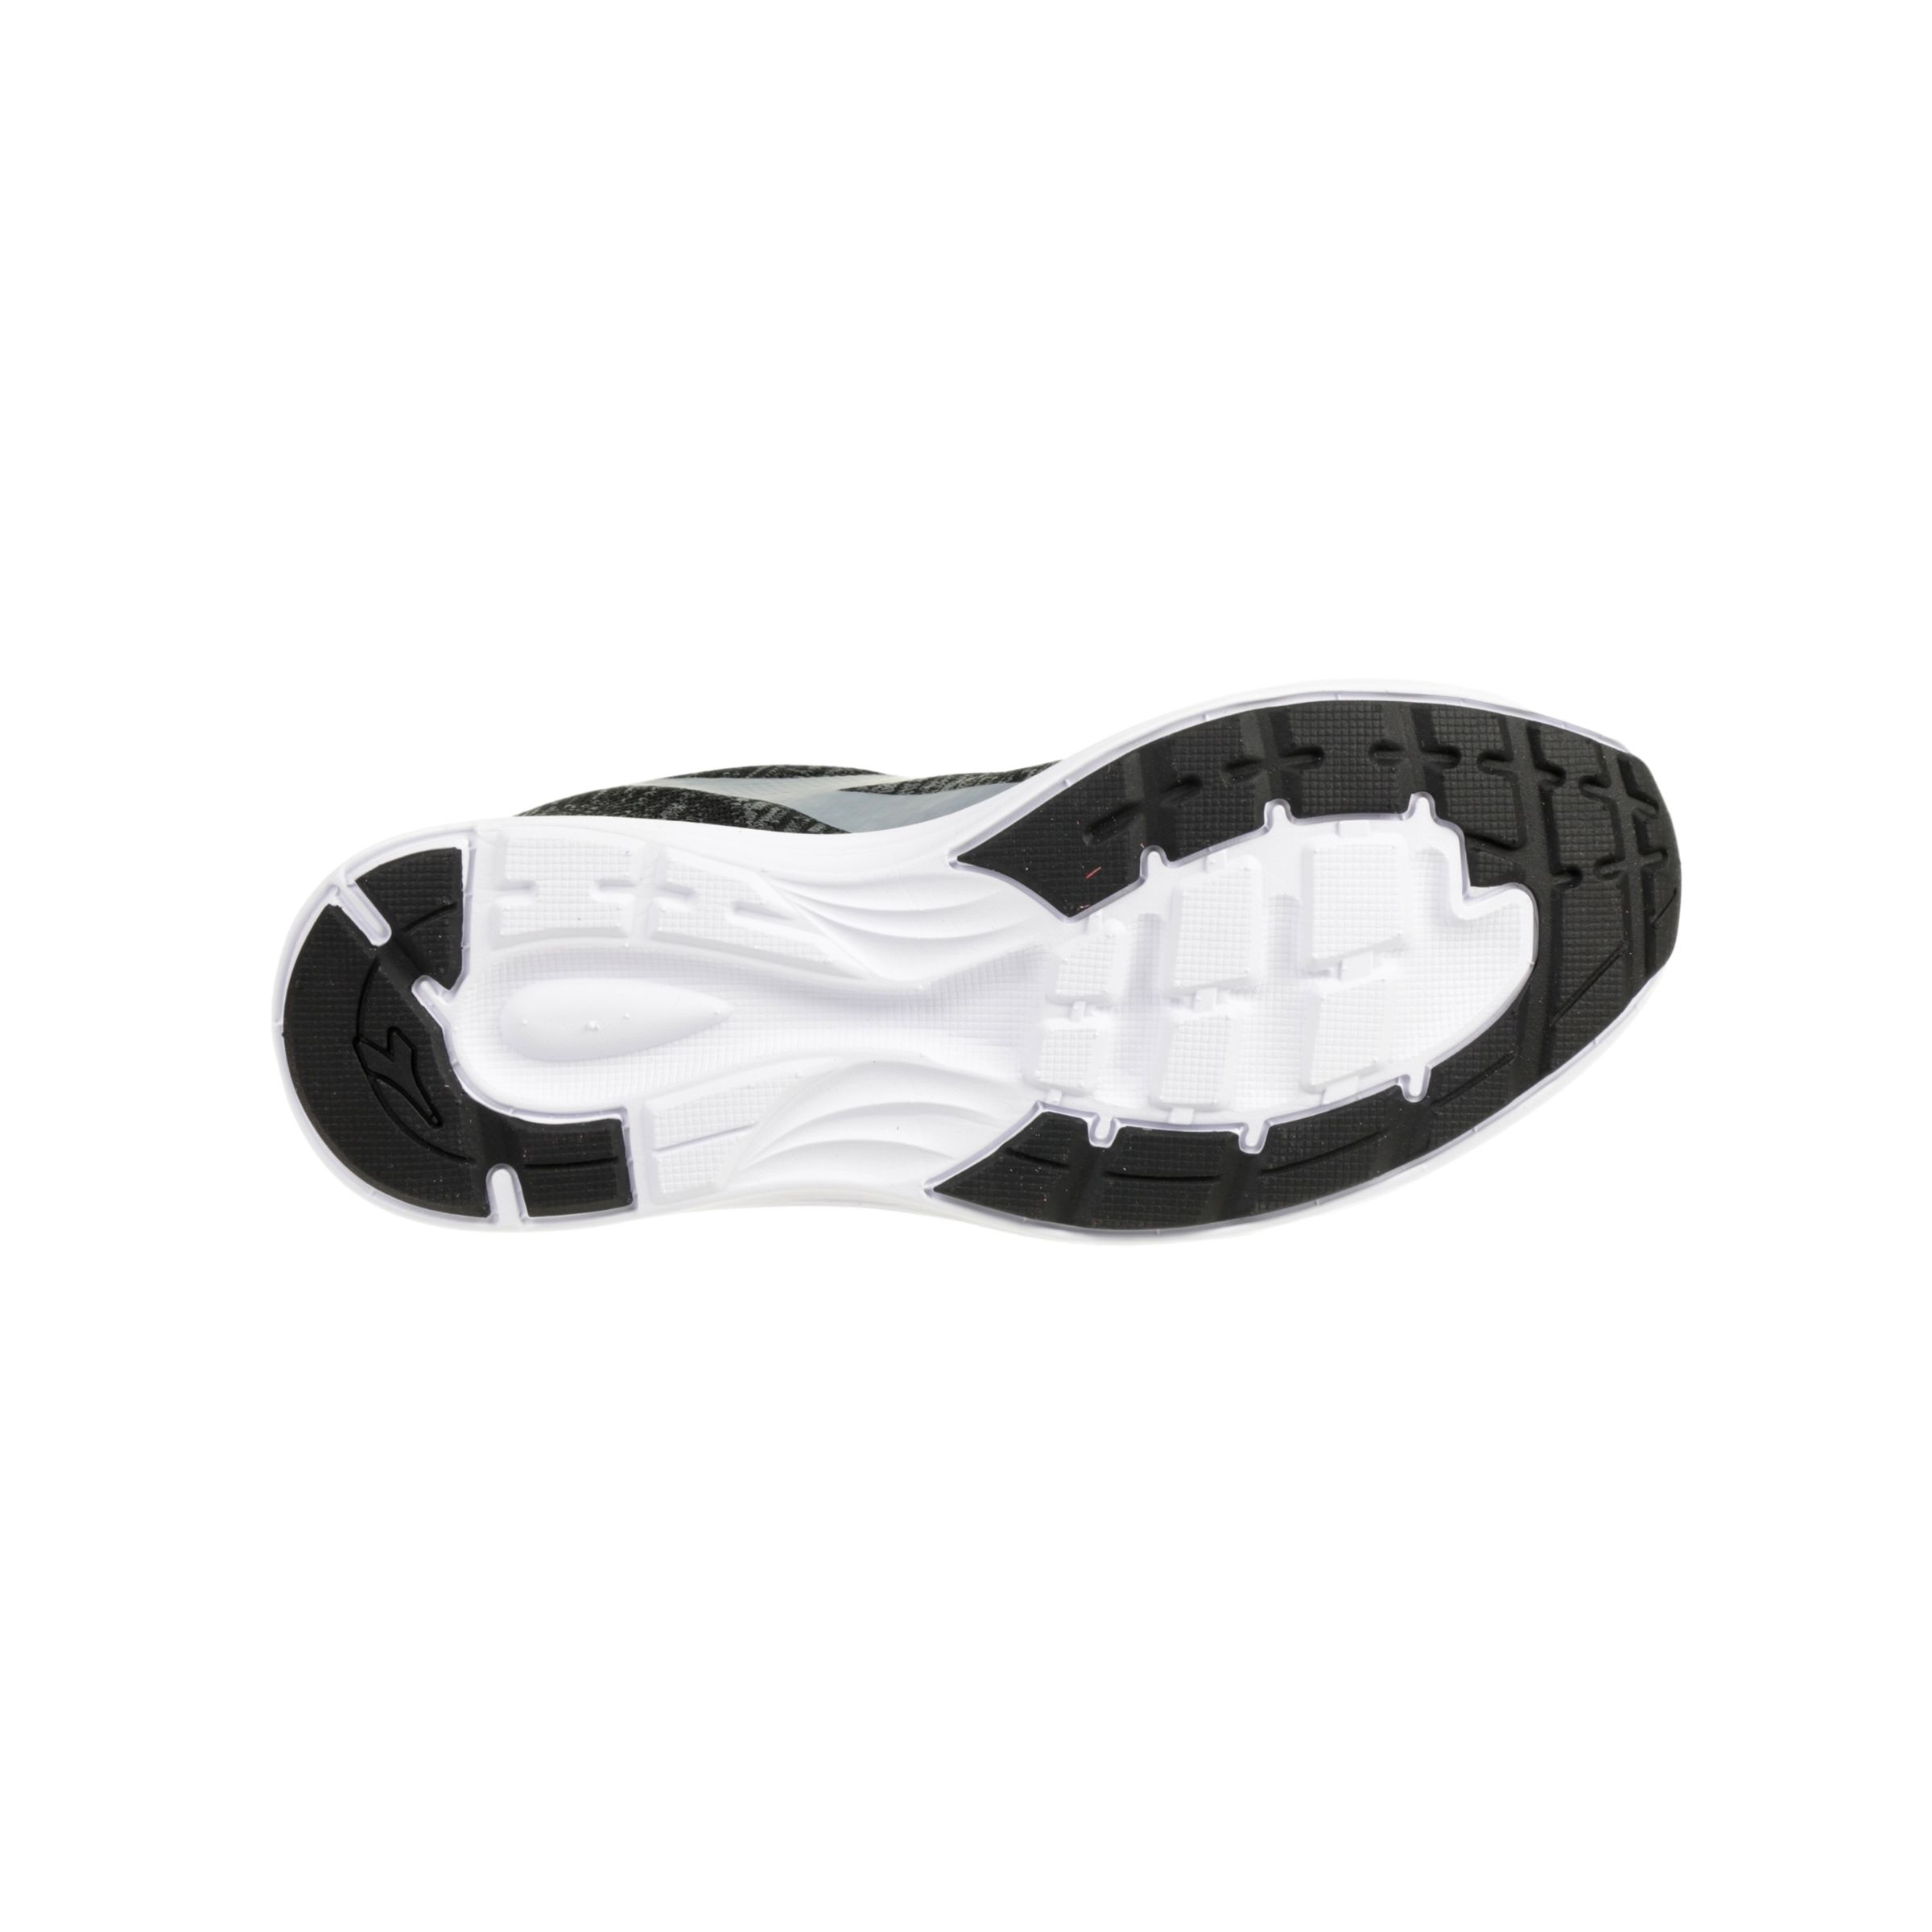 Diadora Dinamica W Damen Sneaker Fitnessschuh C7406 Schwarz / Weiß